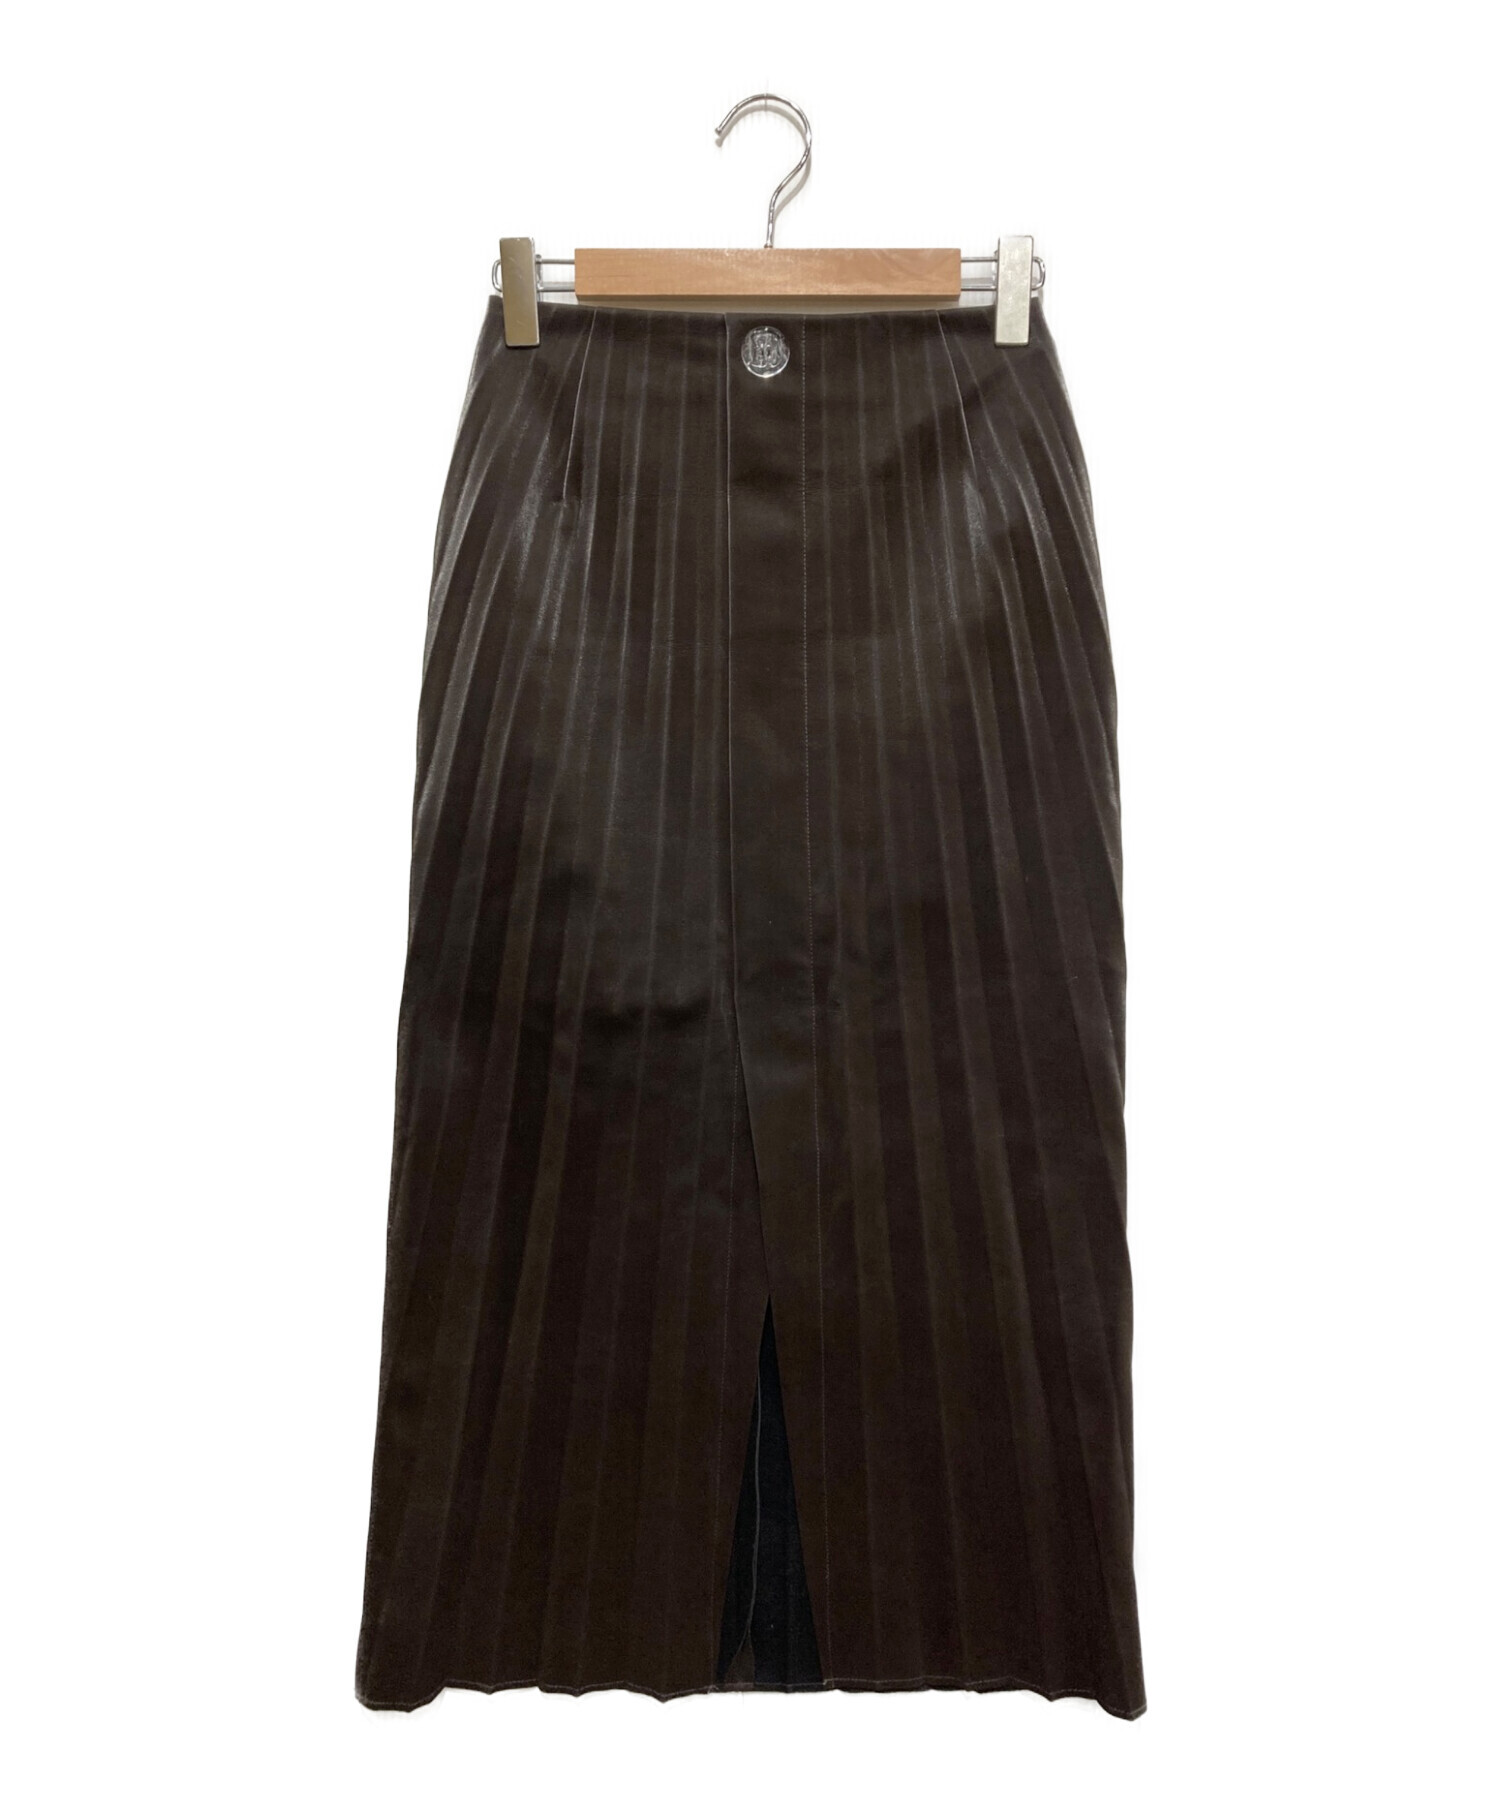 IRENE (アイレネ) Silky Leather Skirt ブラウン サイズ:SIZE 36